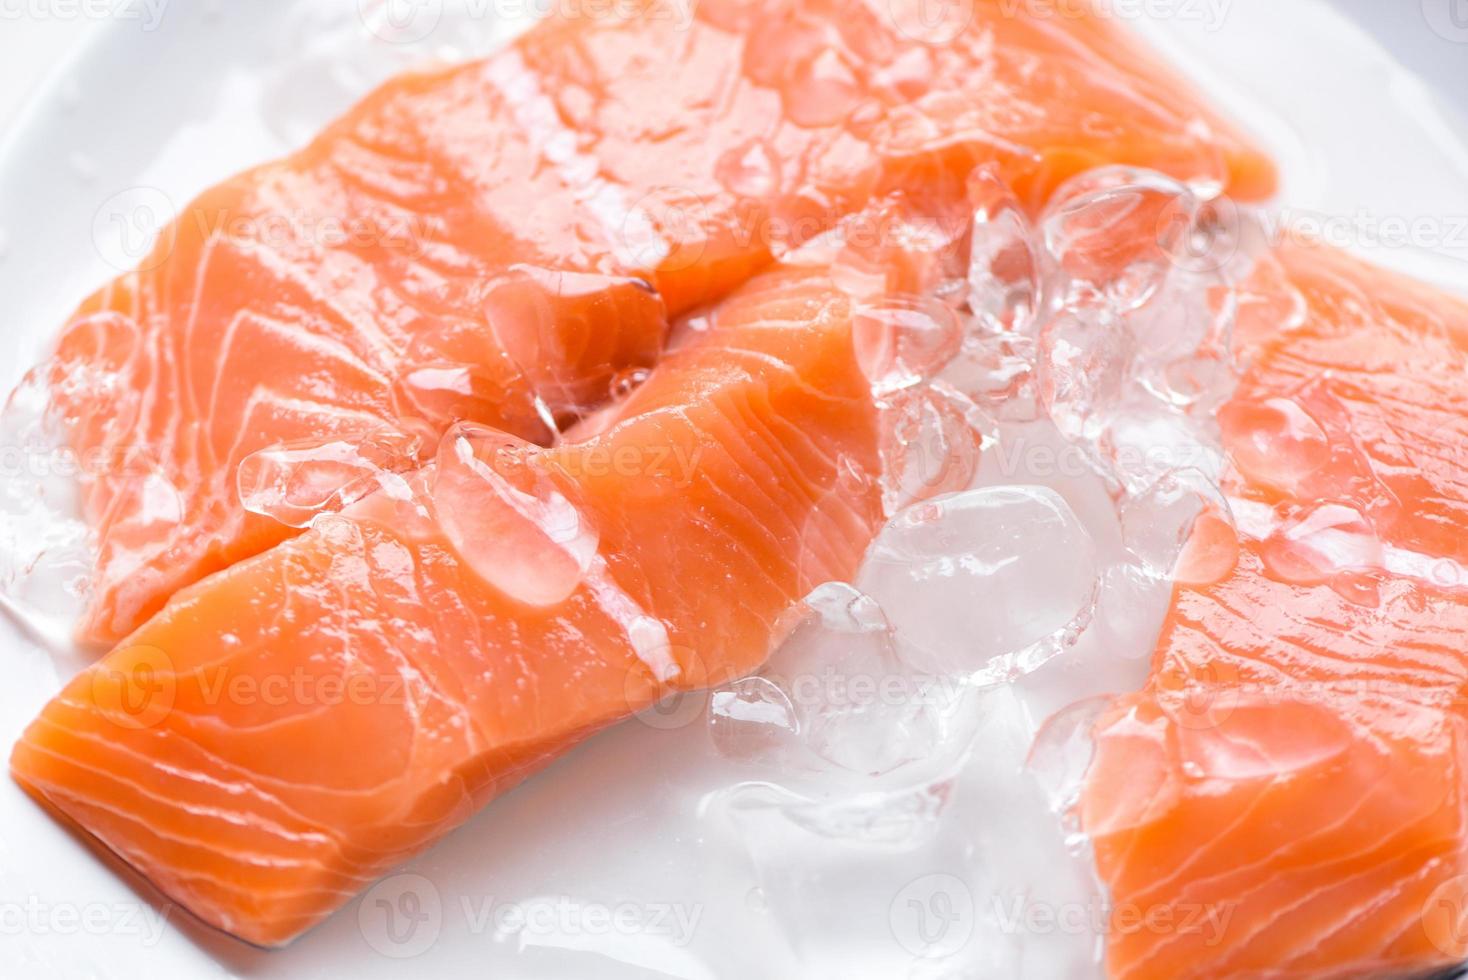 verse zalm vis op ijs, close-up rauwe zalmfilet zeevruchten voor sashimi foto